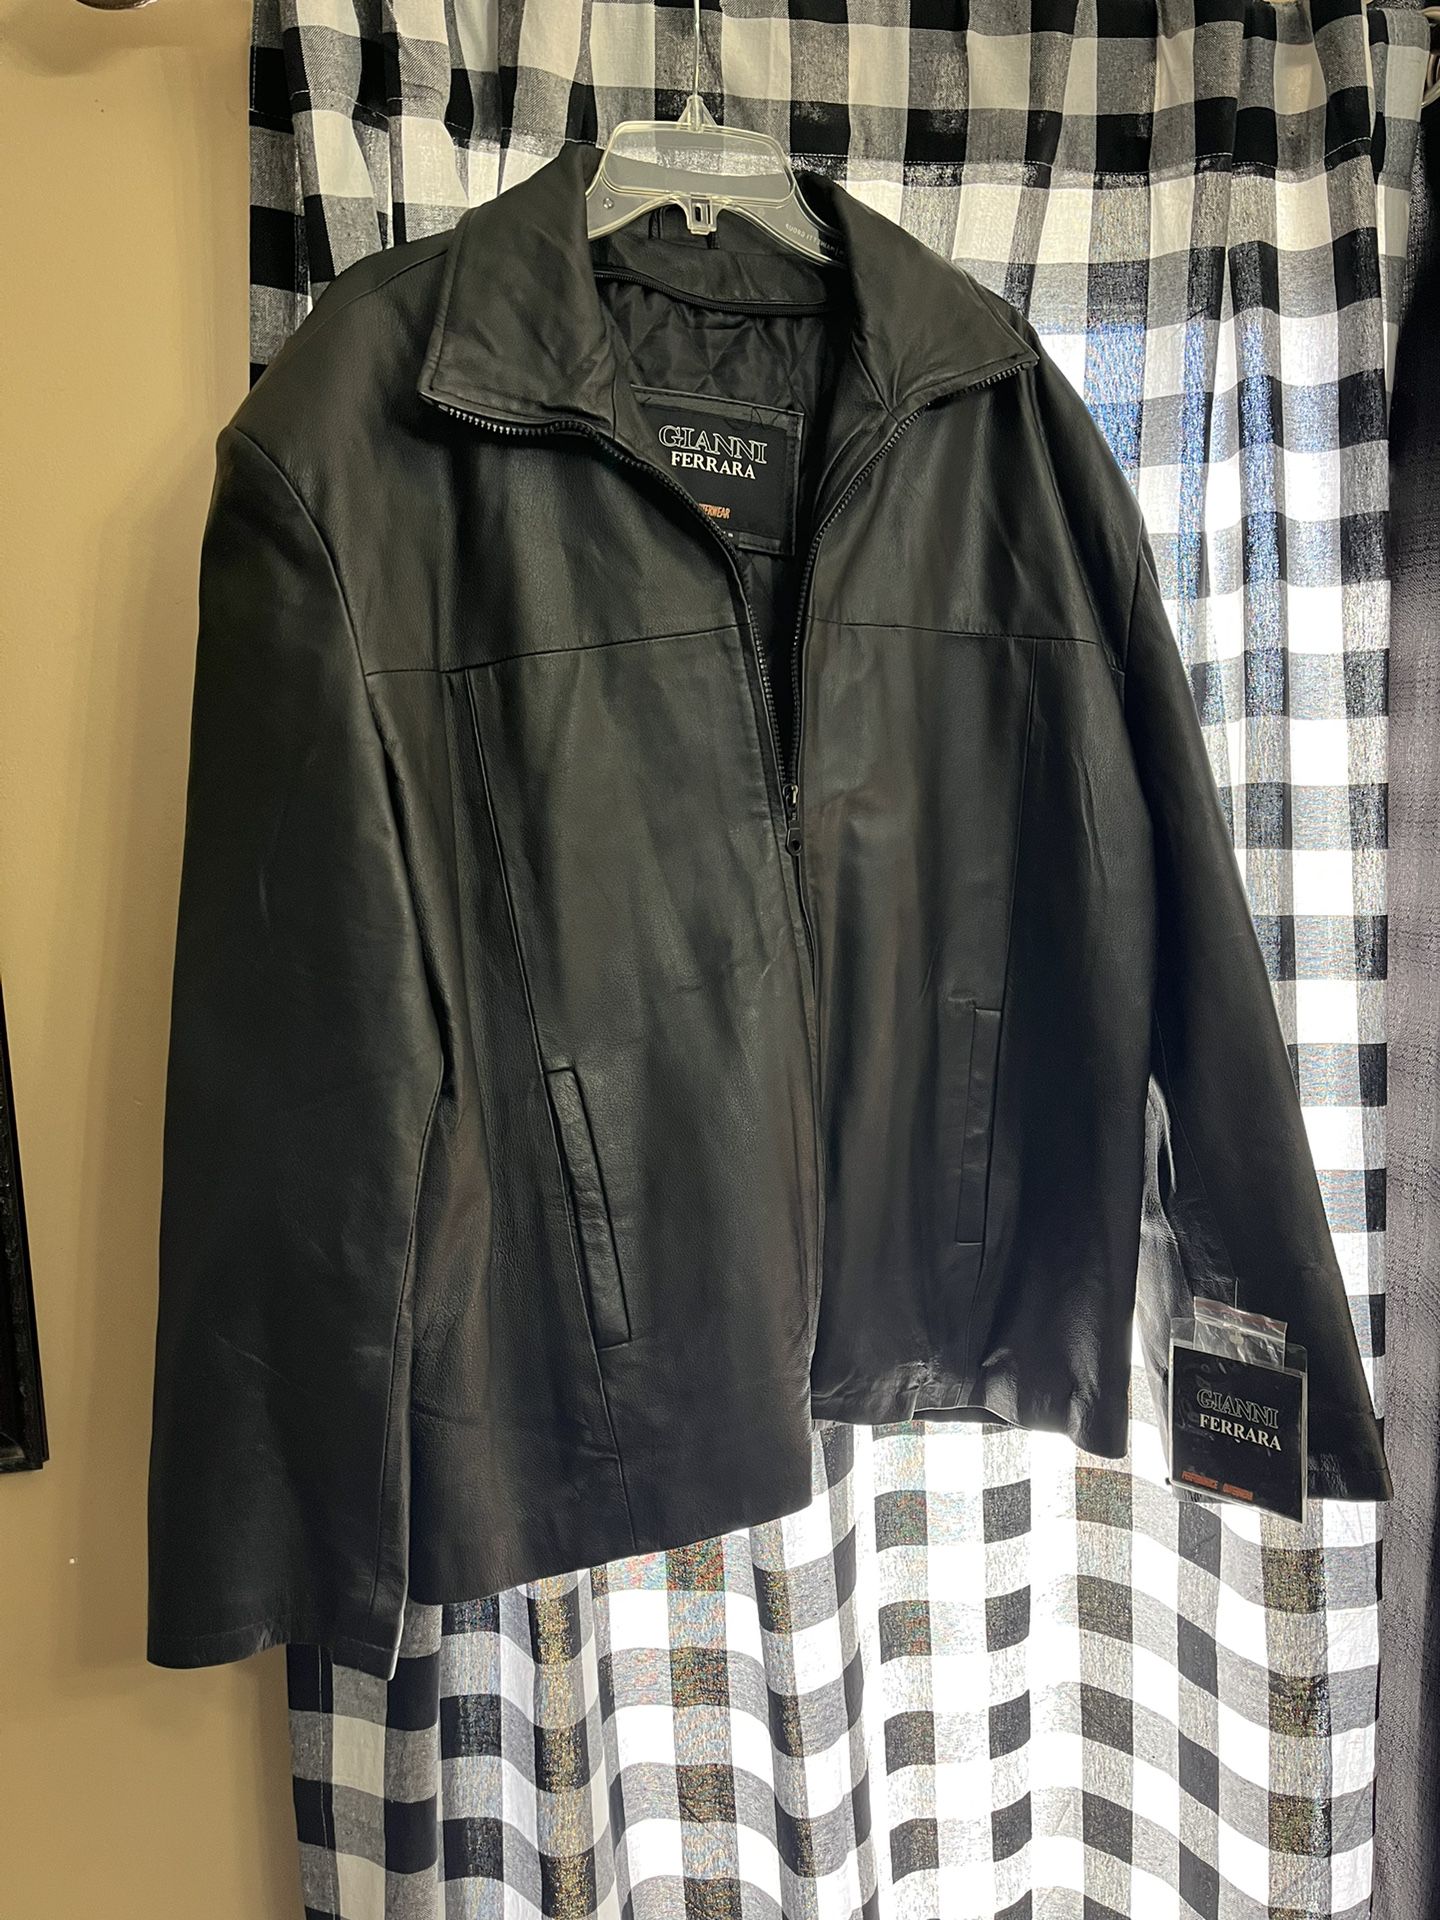 Leather Men’s Jacket